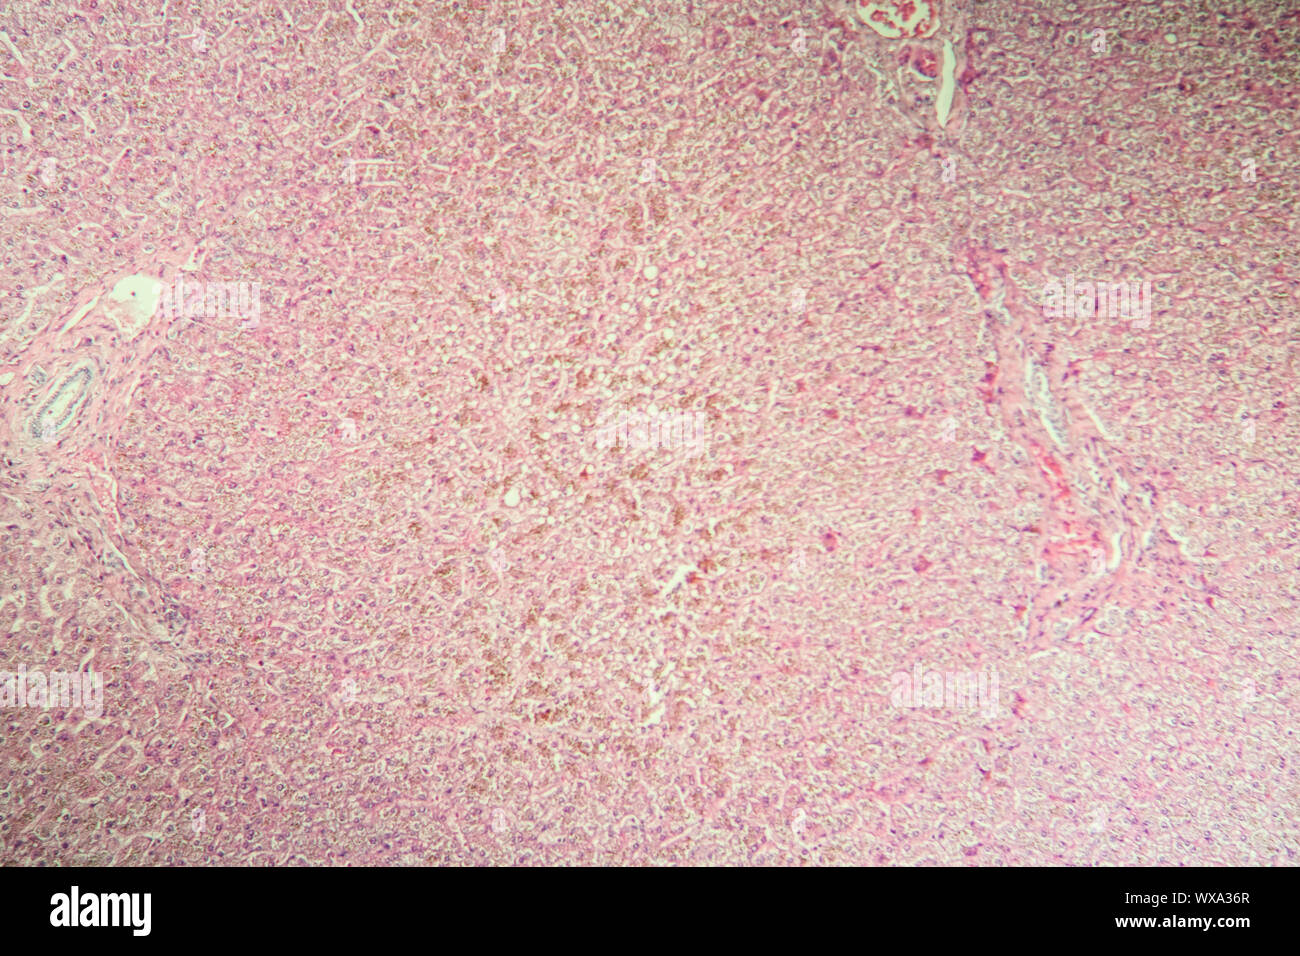 Dubin Johnson liver disease in the microscope 100x Stock Photo